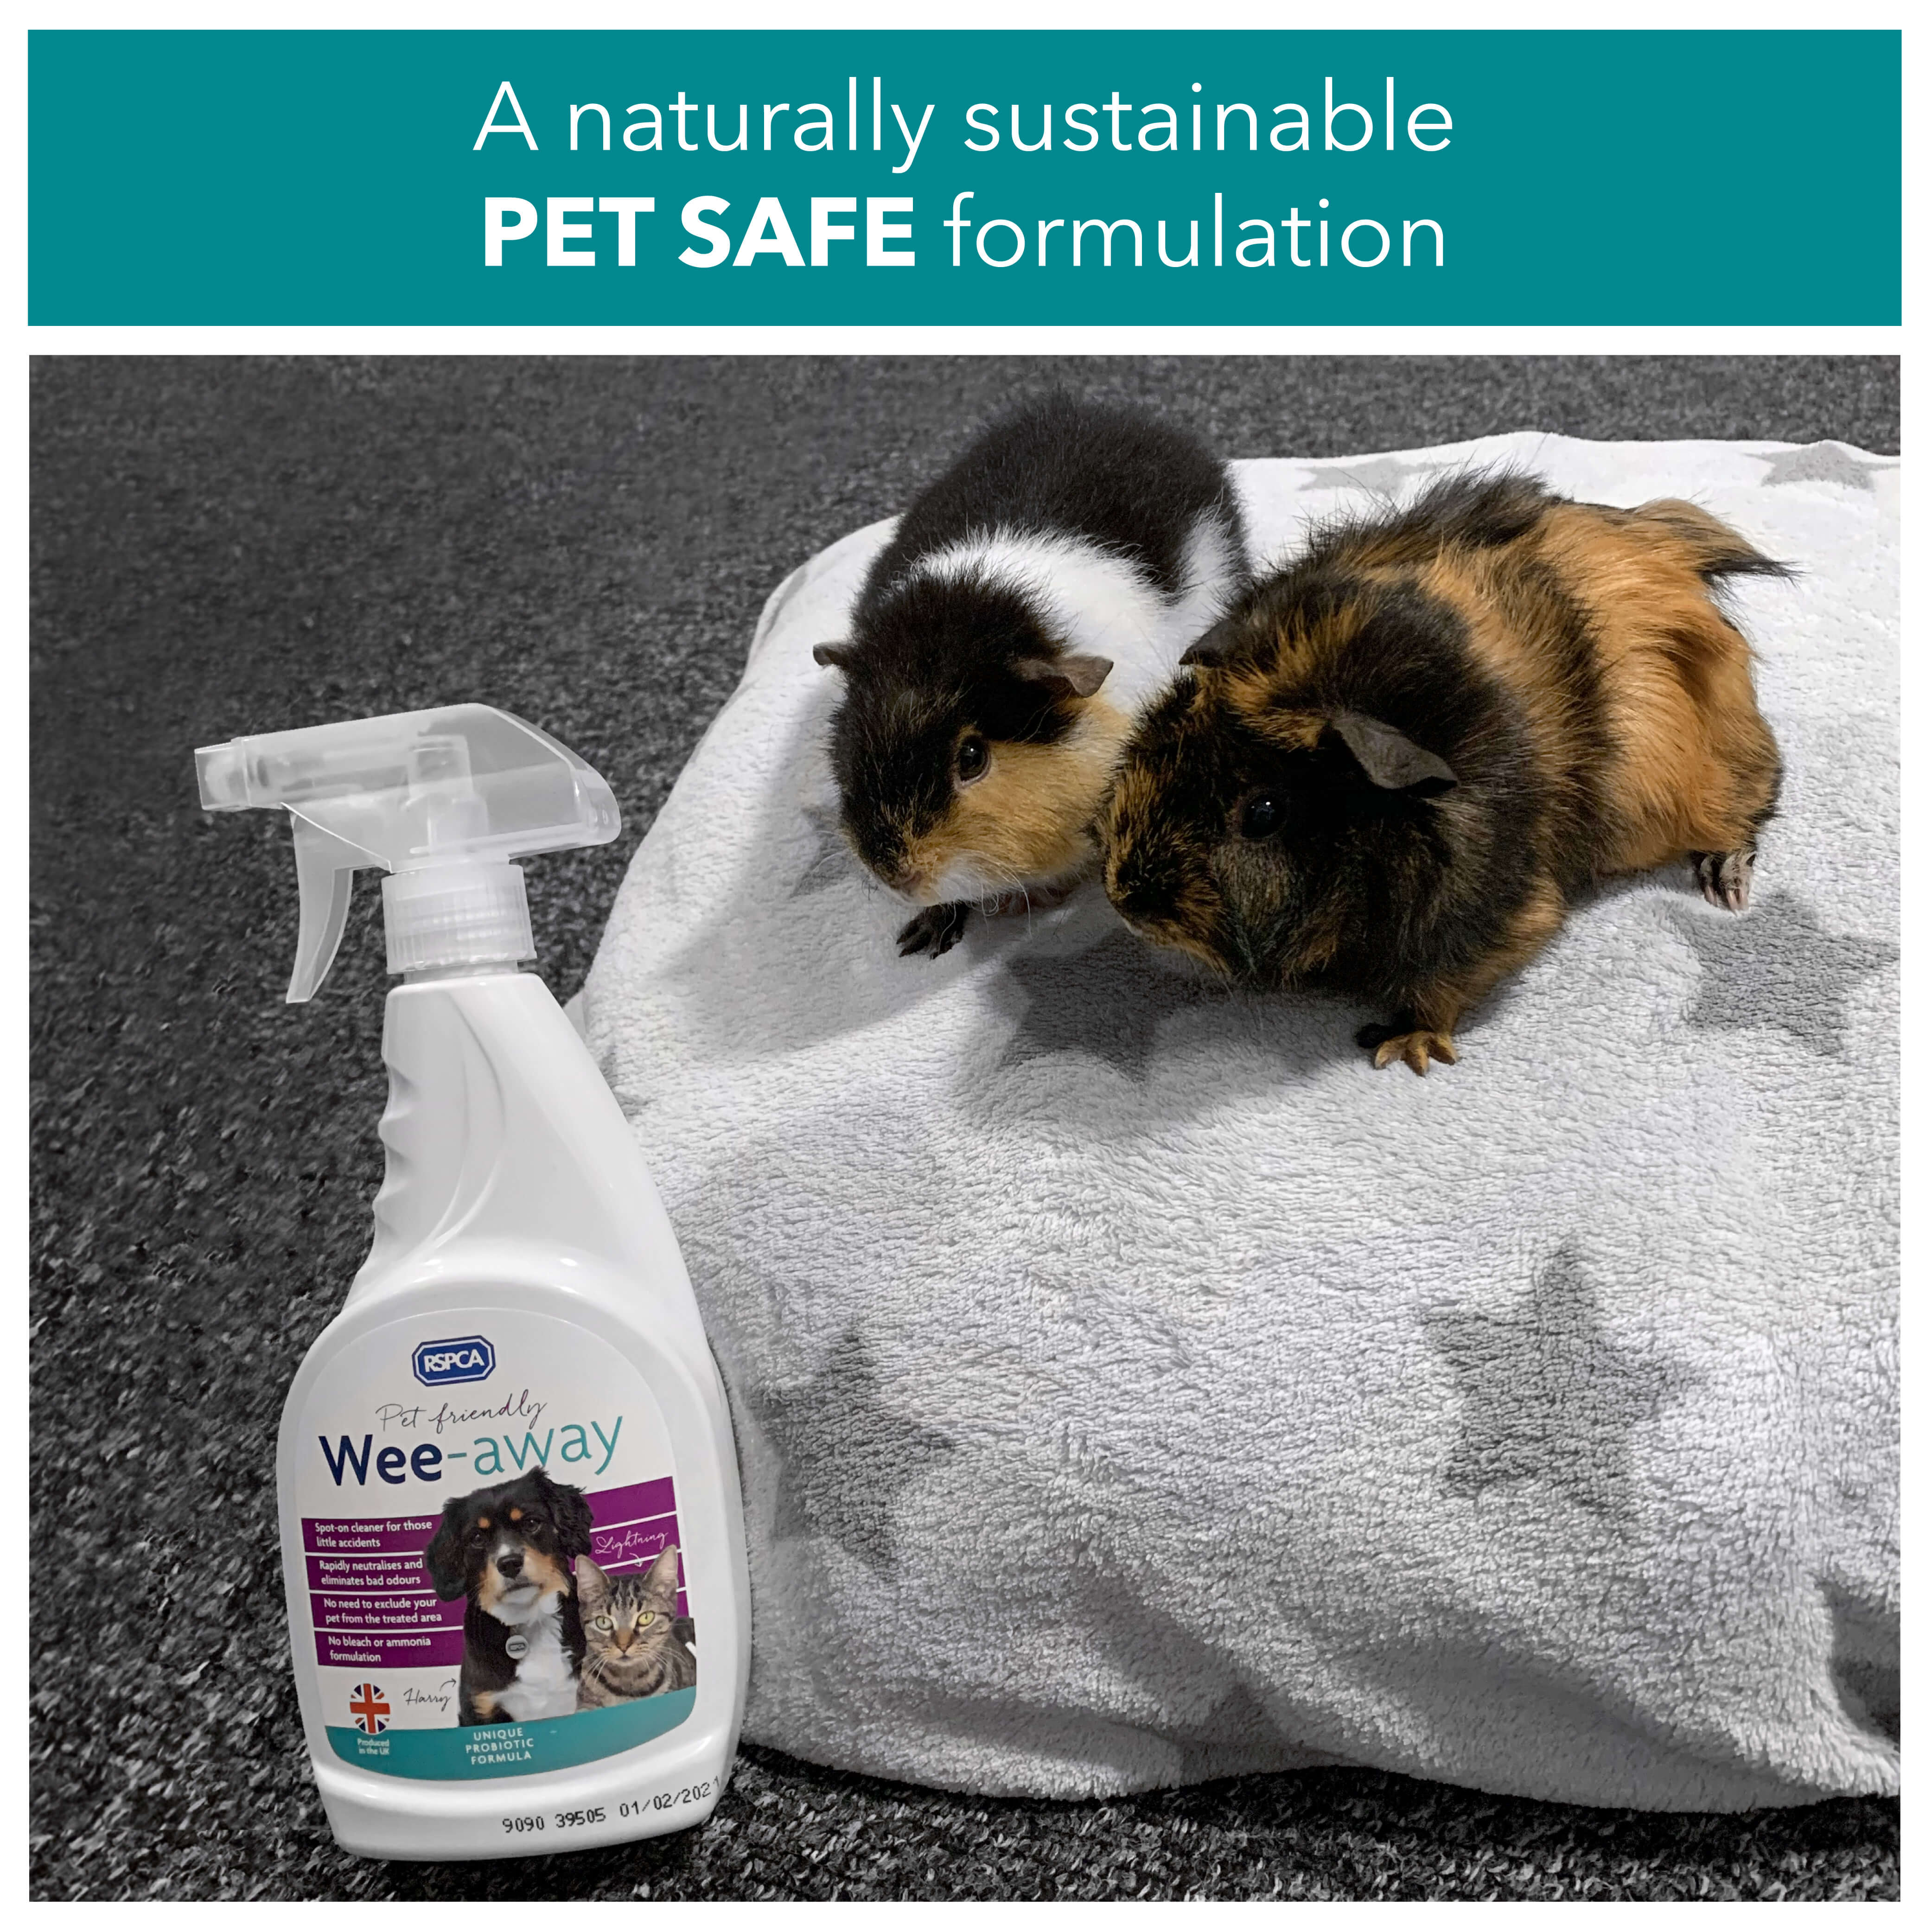 A natural sustainable pet safe formulation 